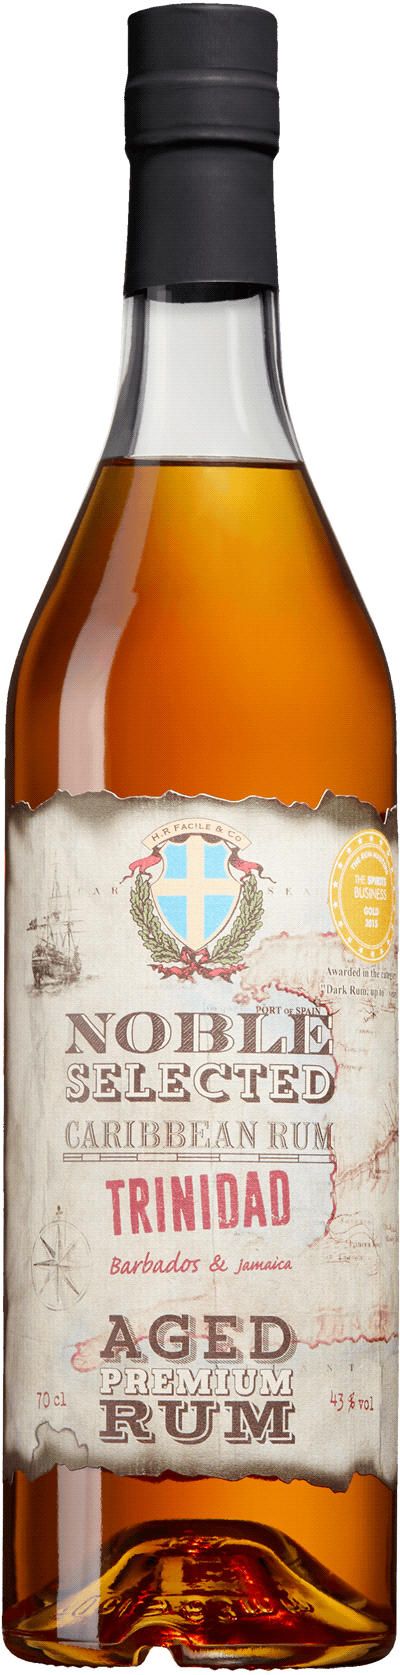 Noble Selected Caribbean Rum